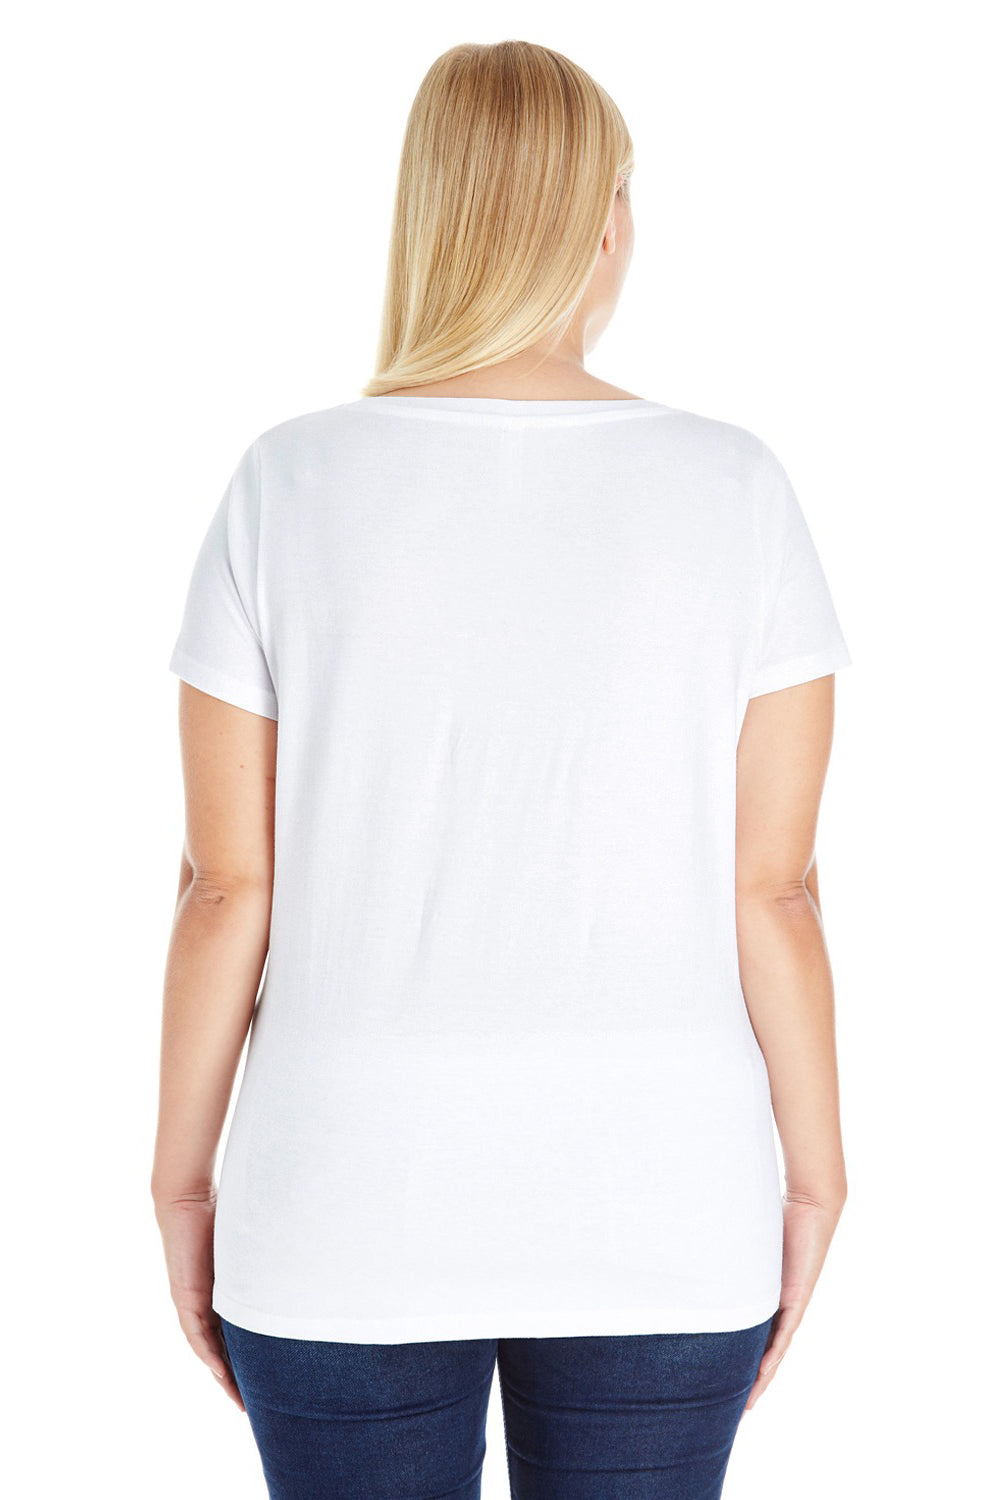 LAT 3807 Womens Premium Jersey Short Sleeve V-Neck T-Shirt White Back